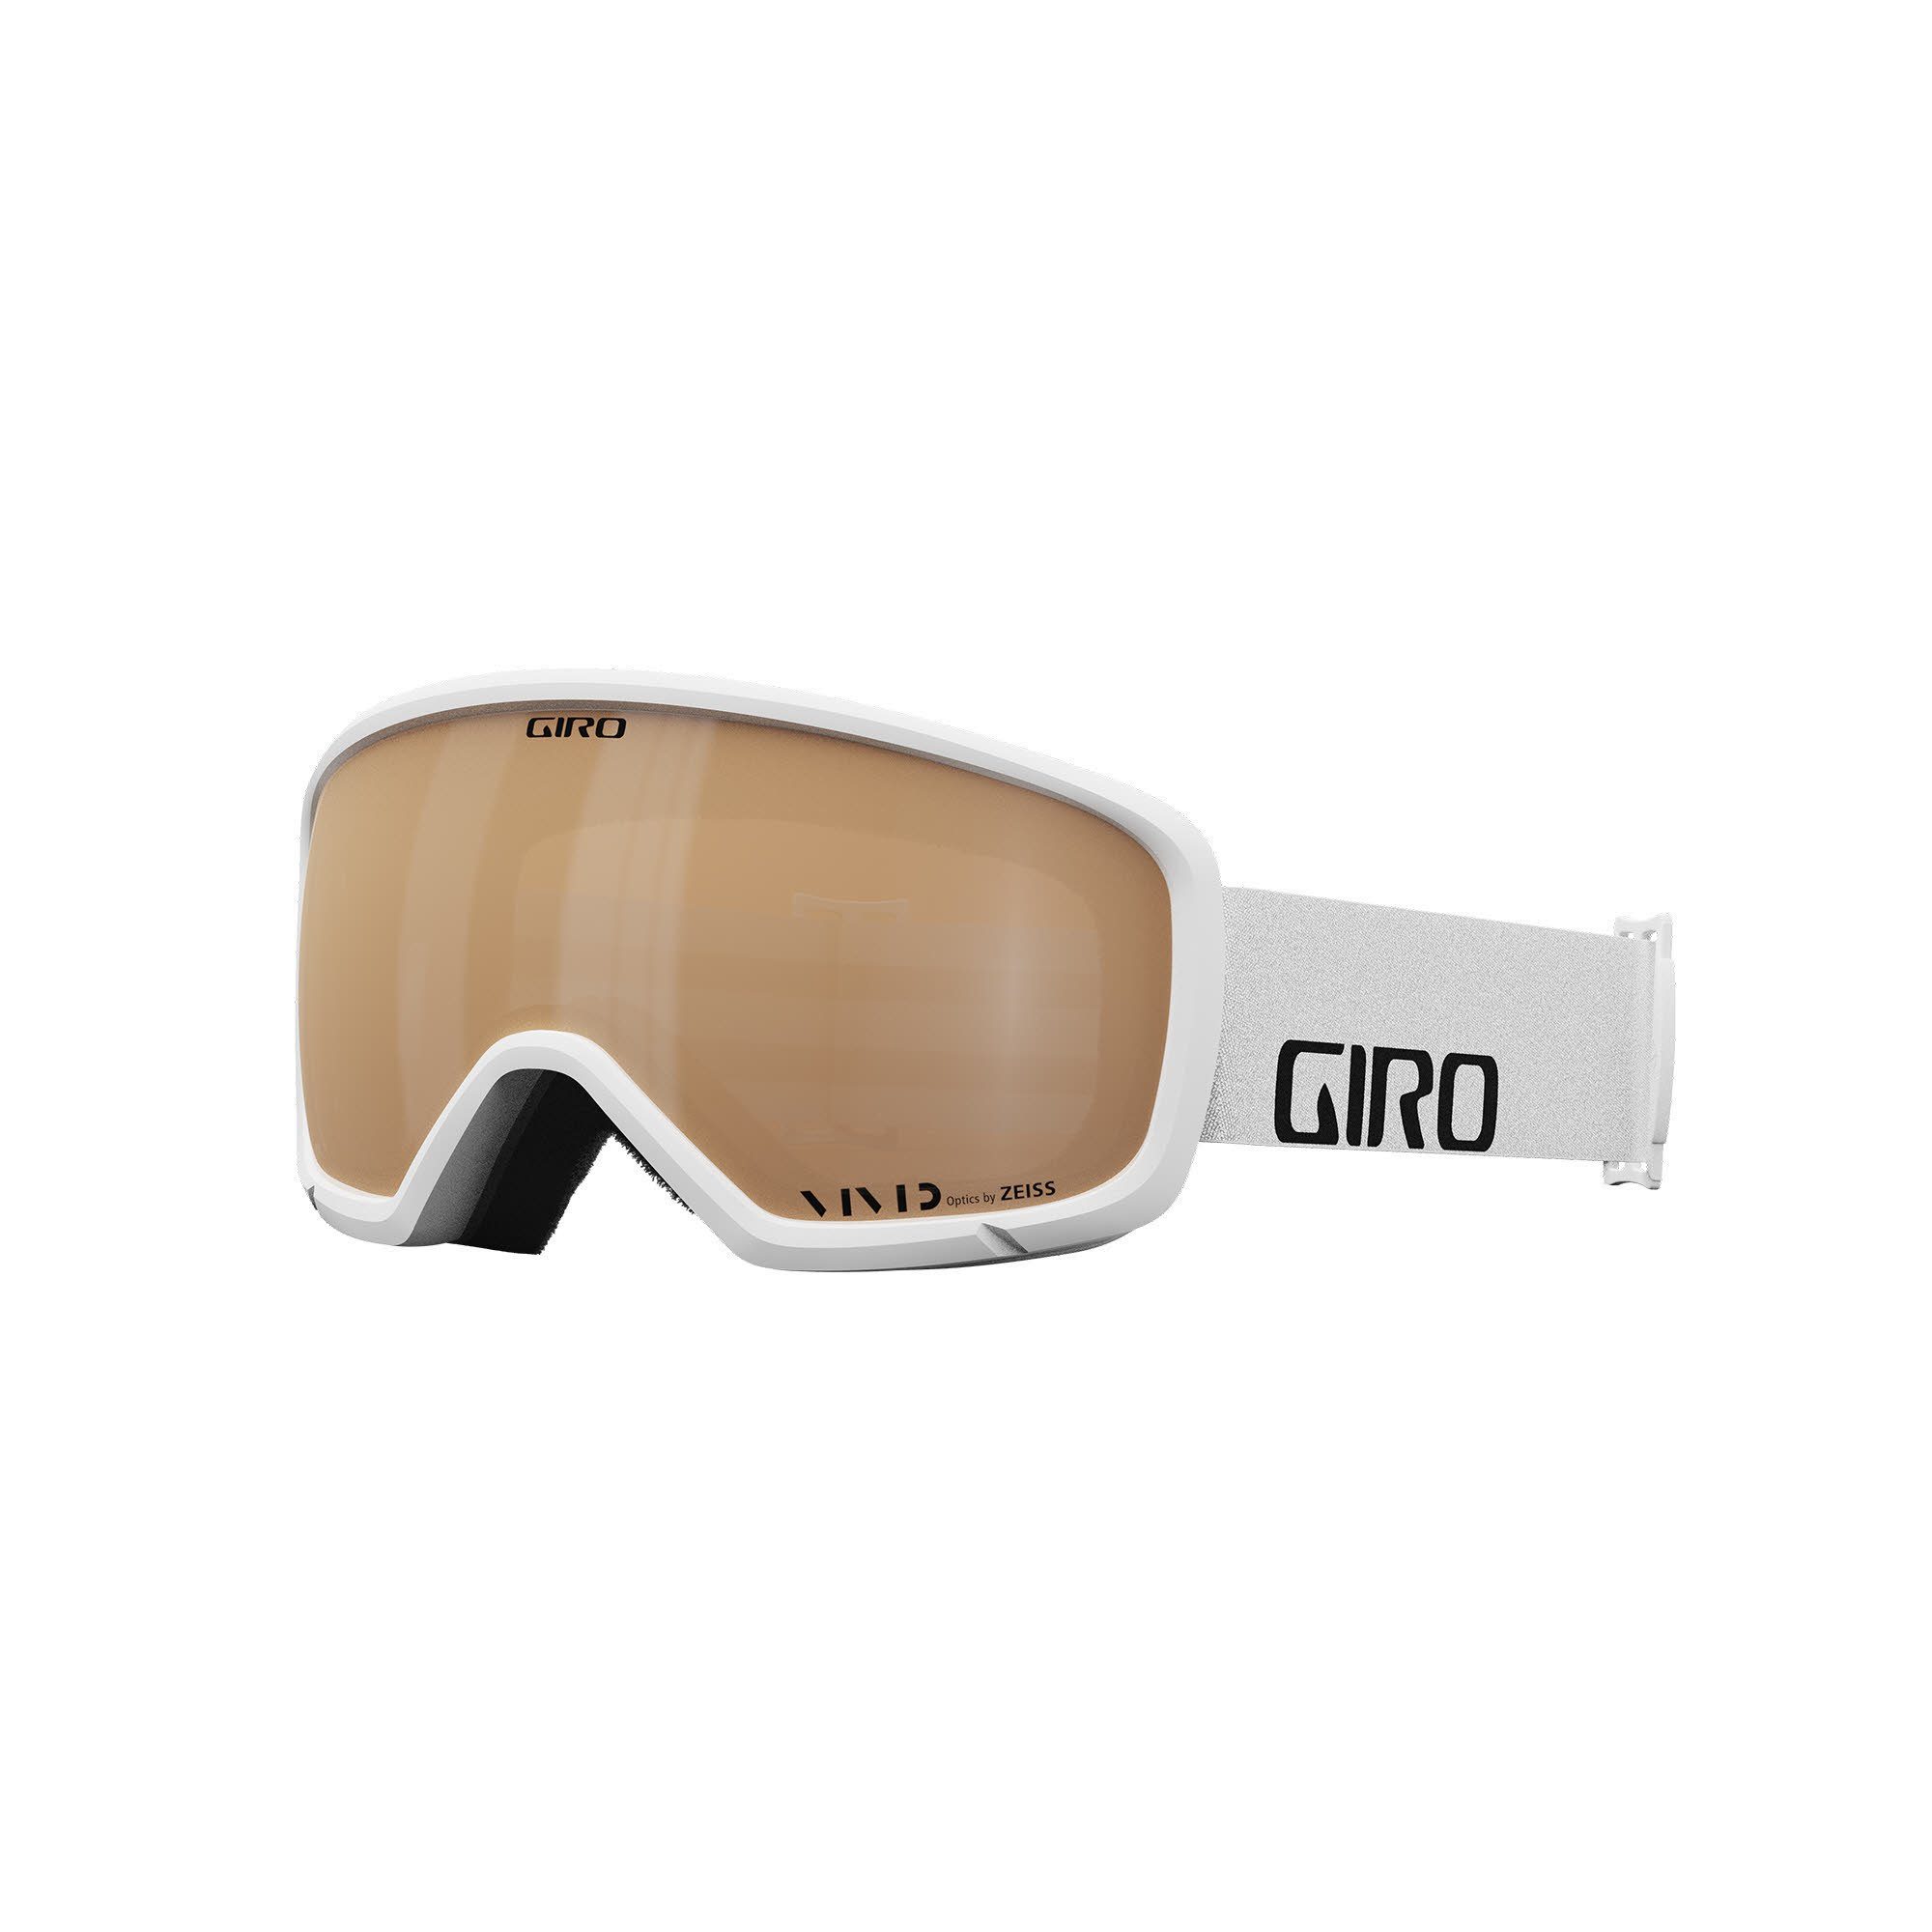 Giro (10) weiss Skibrille